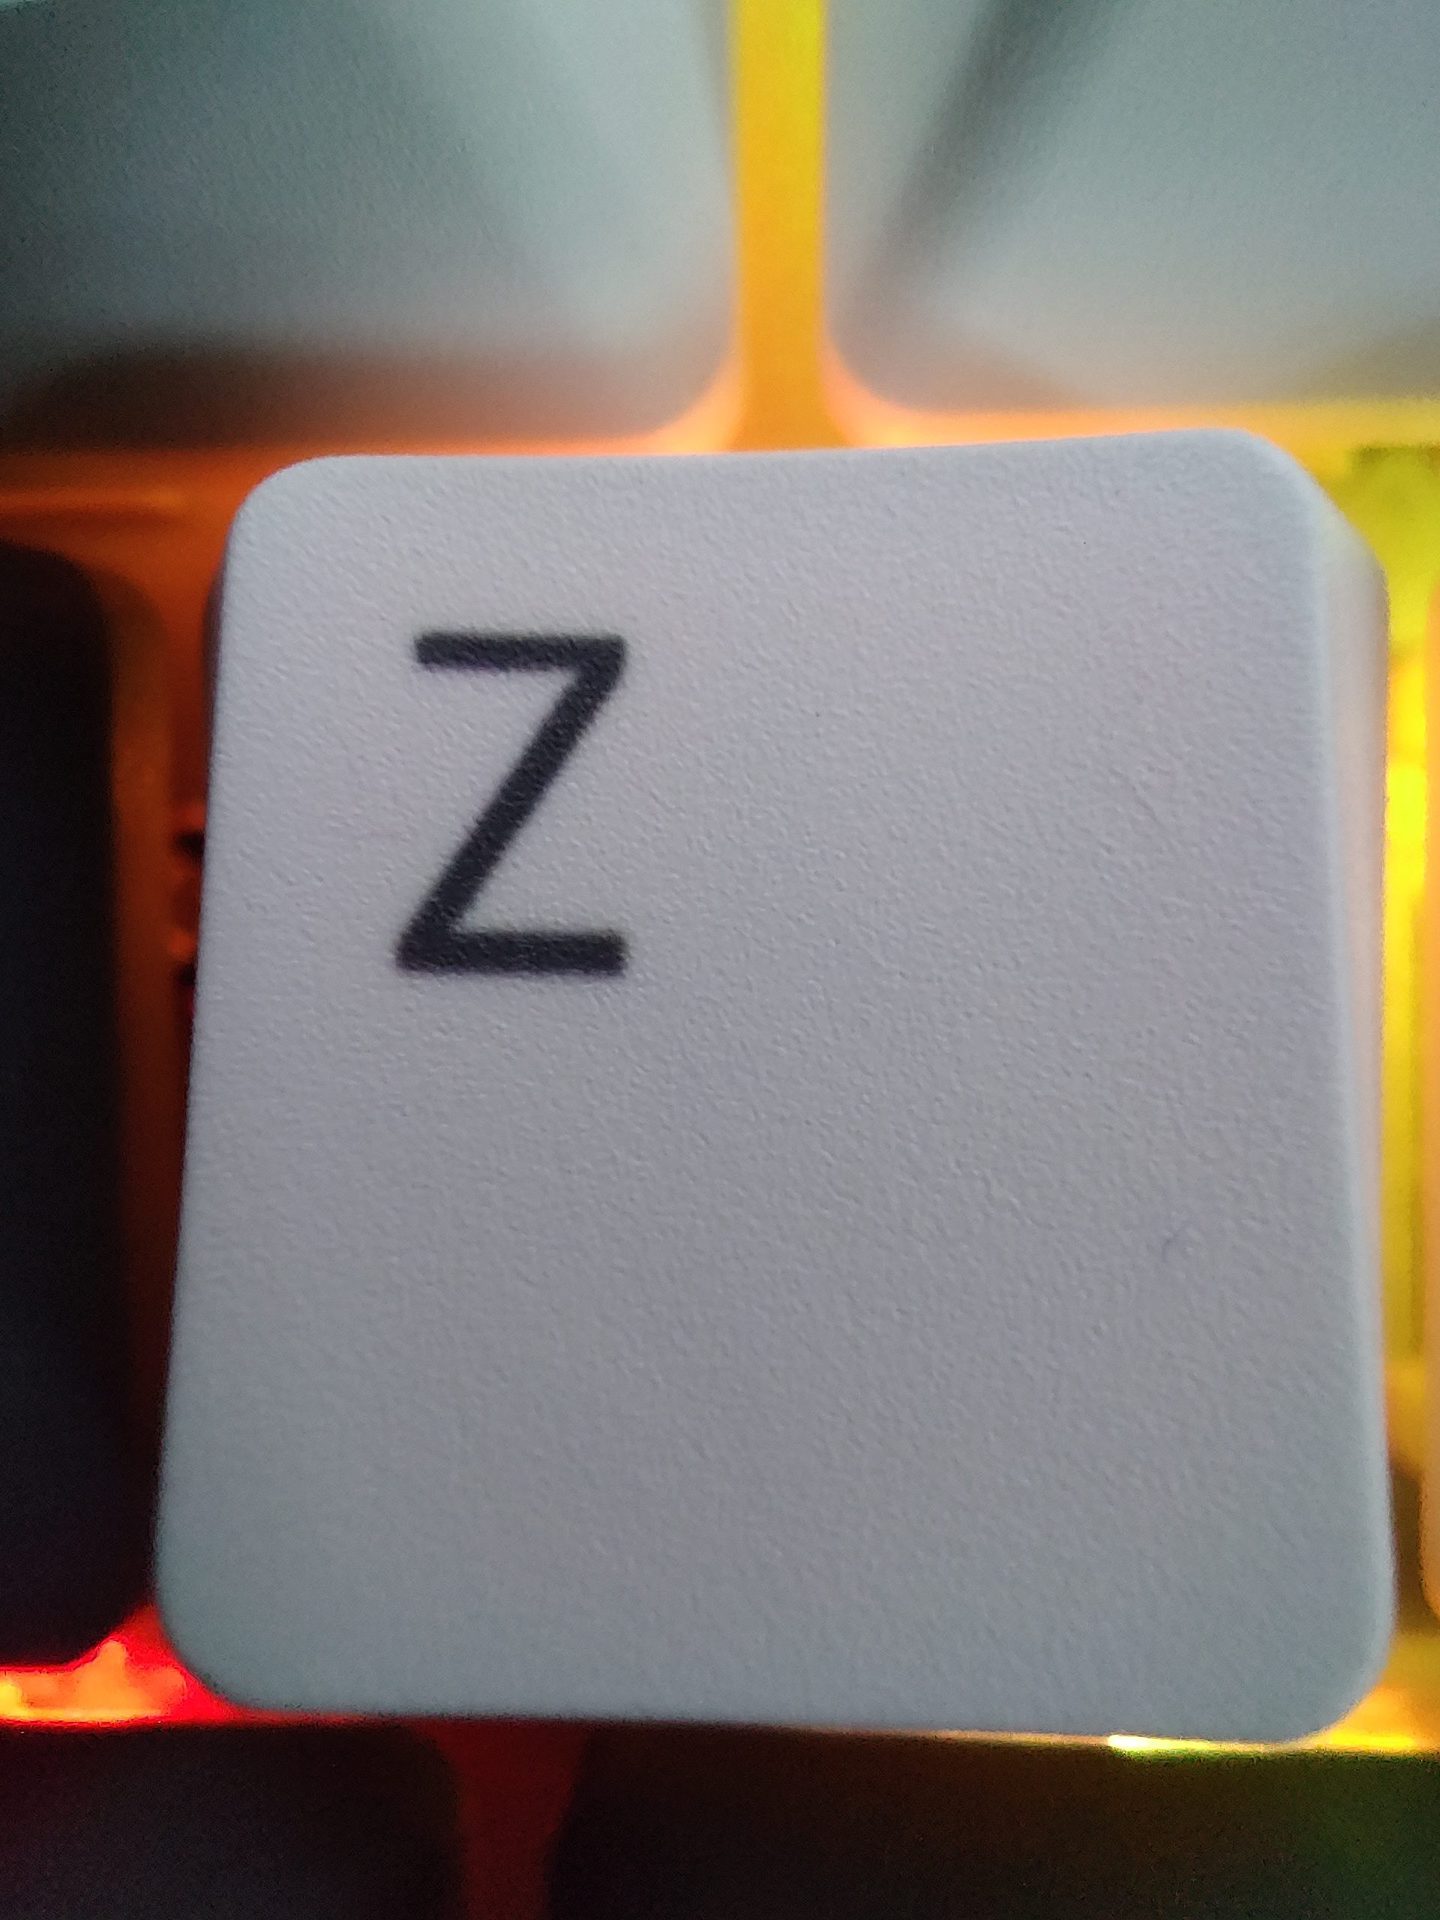 TCL 20 Pro 5G Camera 5MP Macro shot of the Z key on a keyboard.